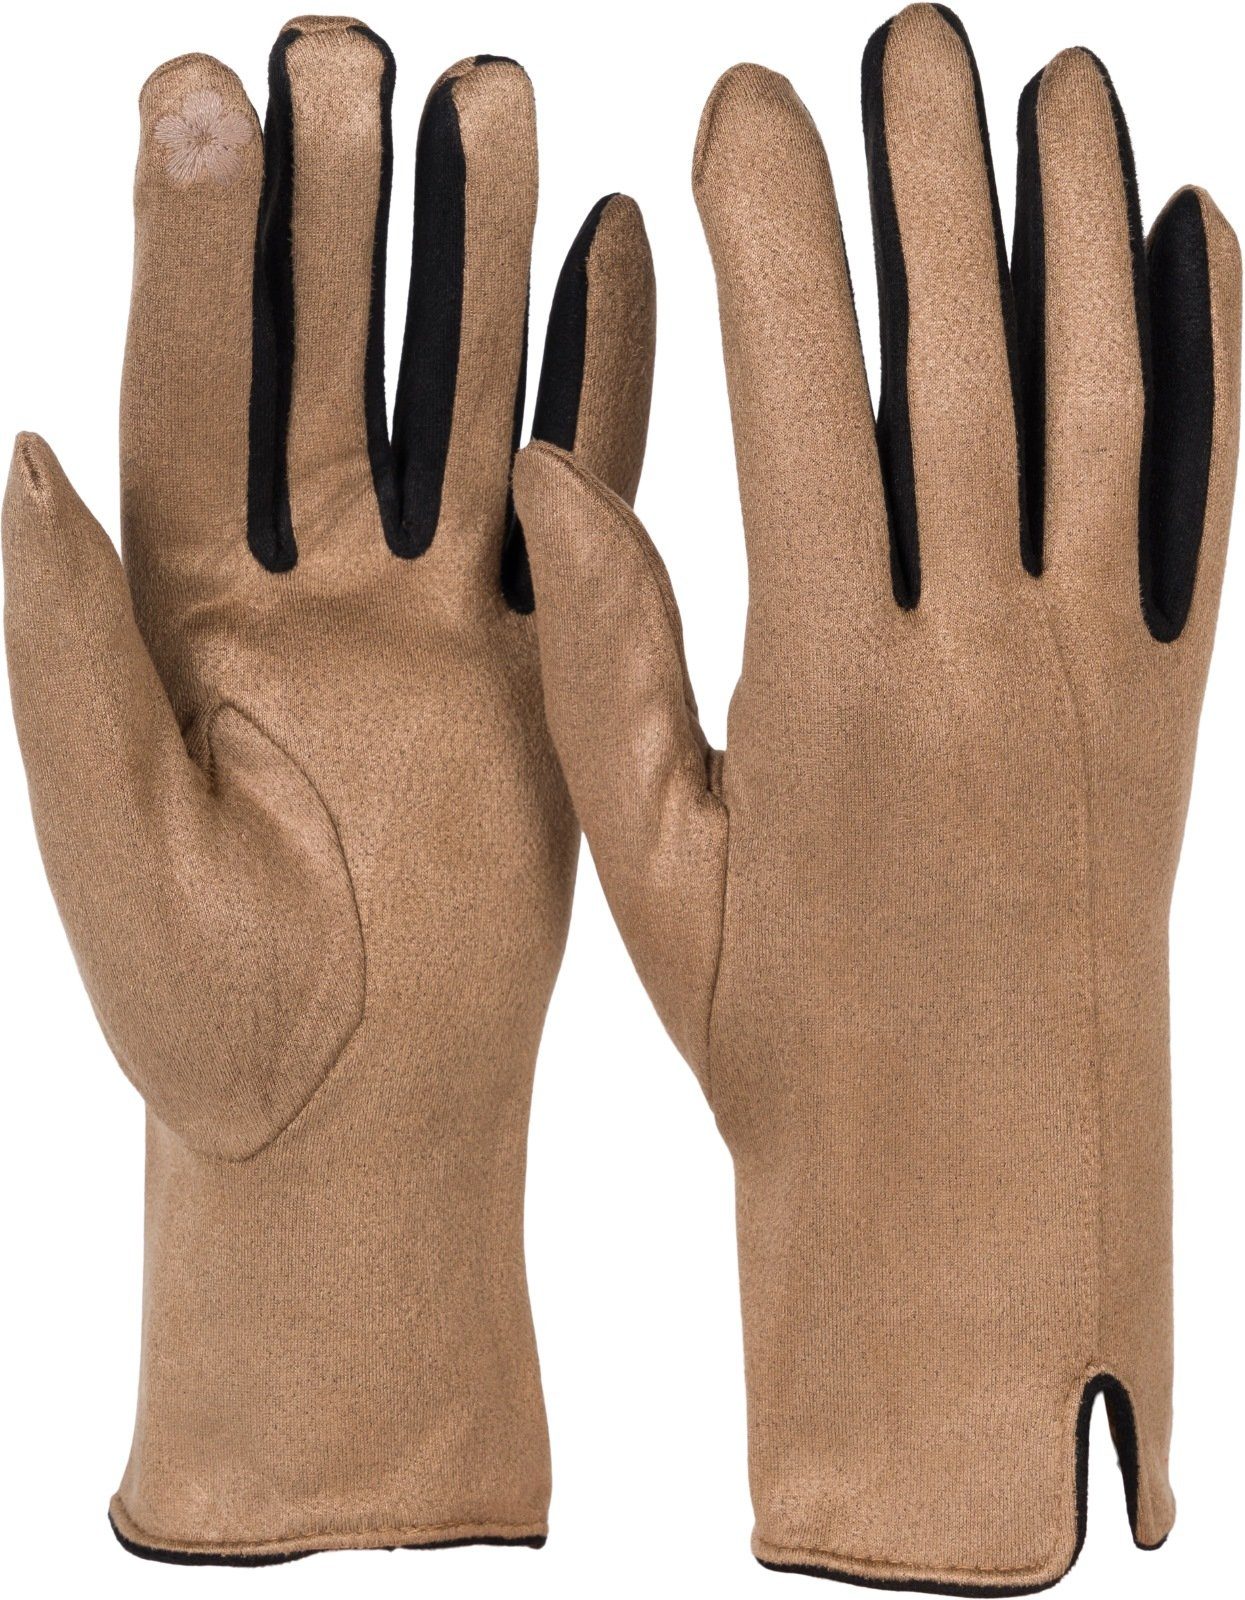 styleBREAKER Fleecehandschuhe Touchscreen Handschuhe Kontrast Taupe